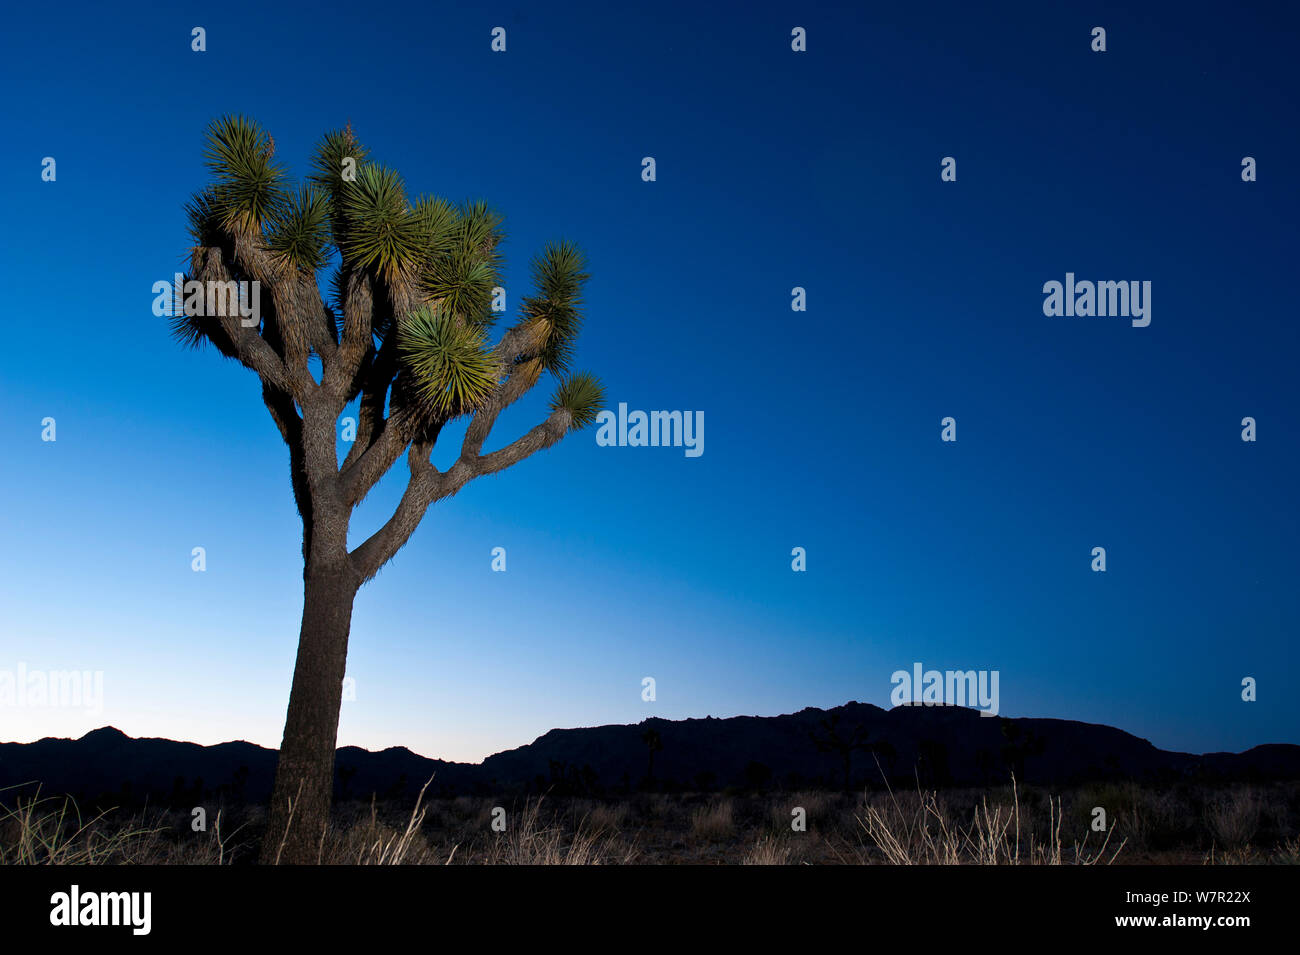 Joshua tree (Yucca brevifolia) at night, Joshua Tree National Park, California, USA, June 2012. Stock Photo